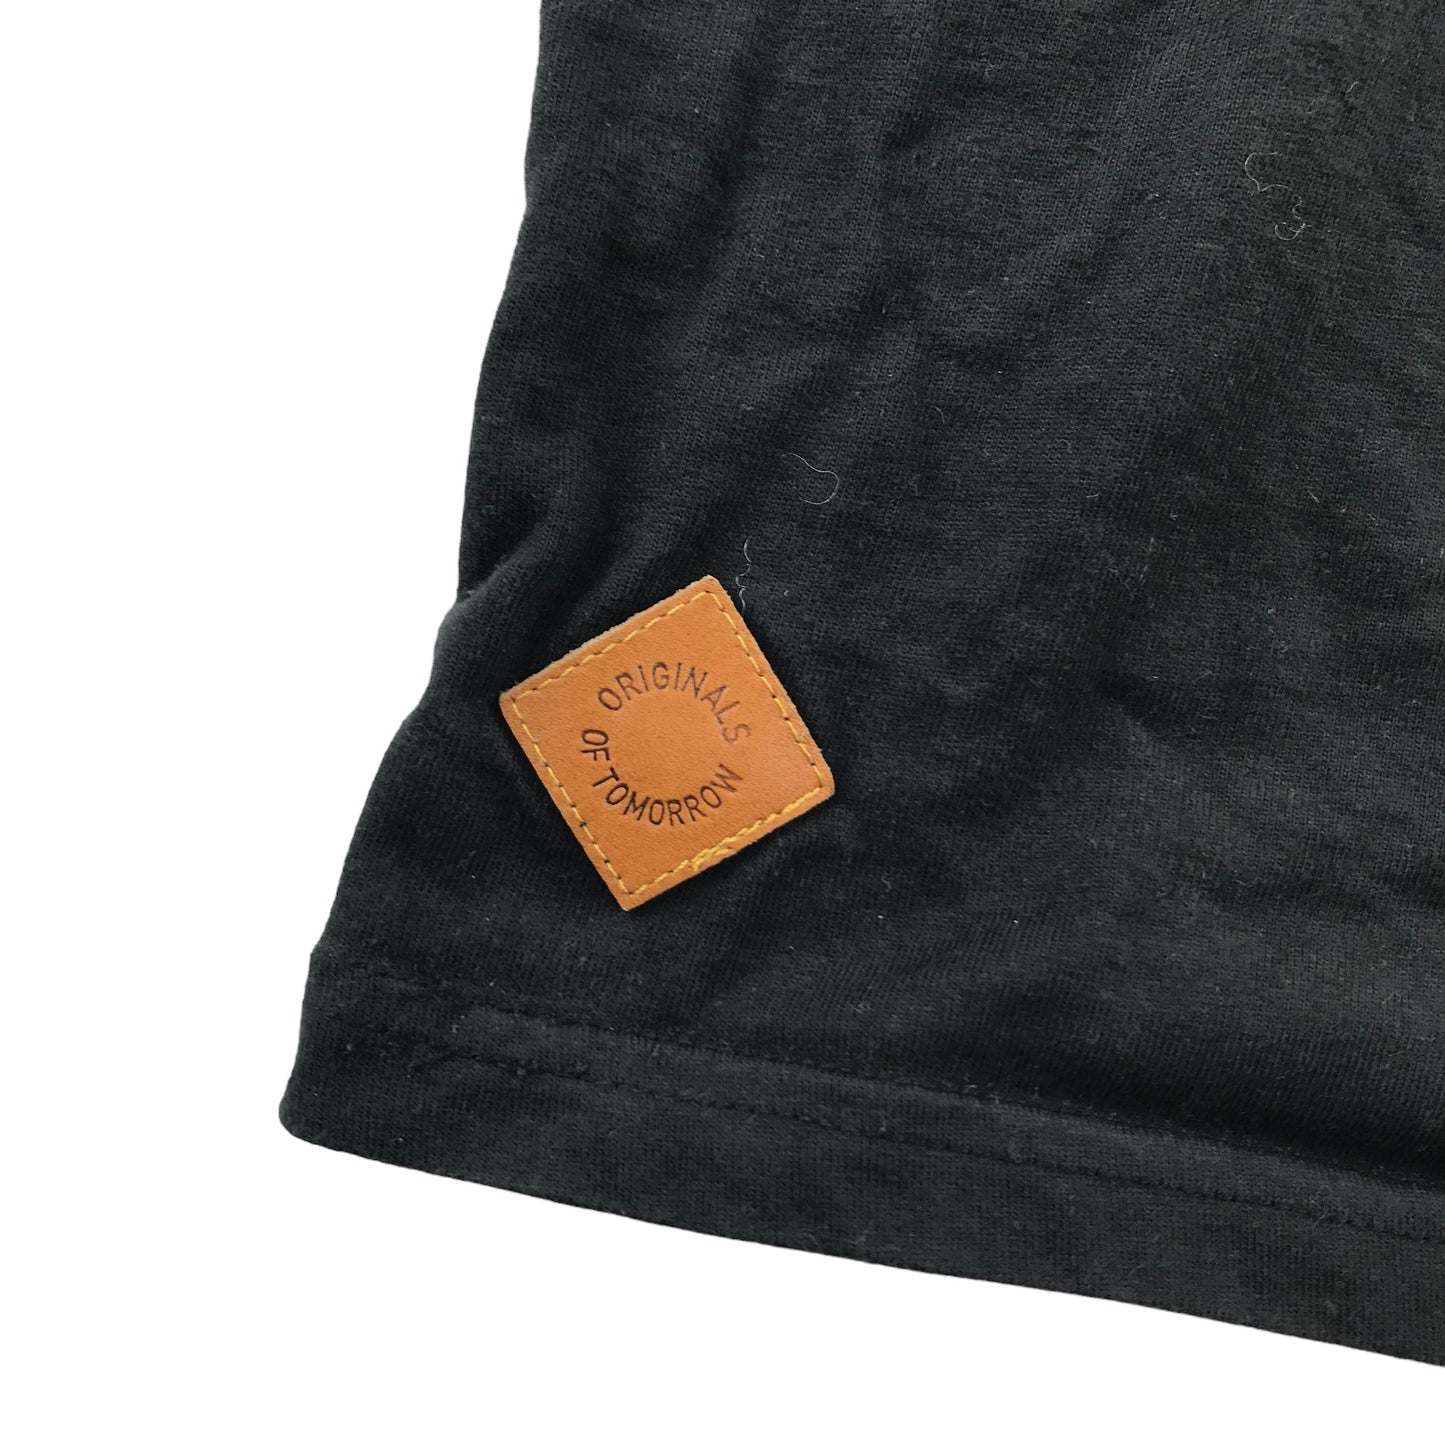 Milk Copenhagen T-shirt Age 12-13 Brown and Black Gradient Number Print Long Sleeve Cotton